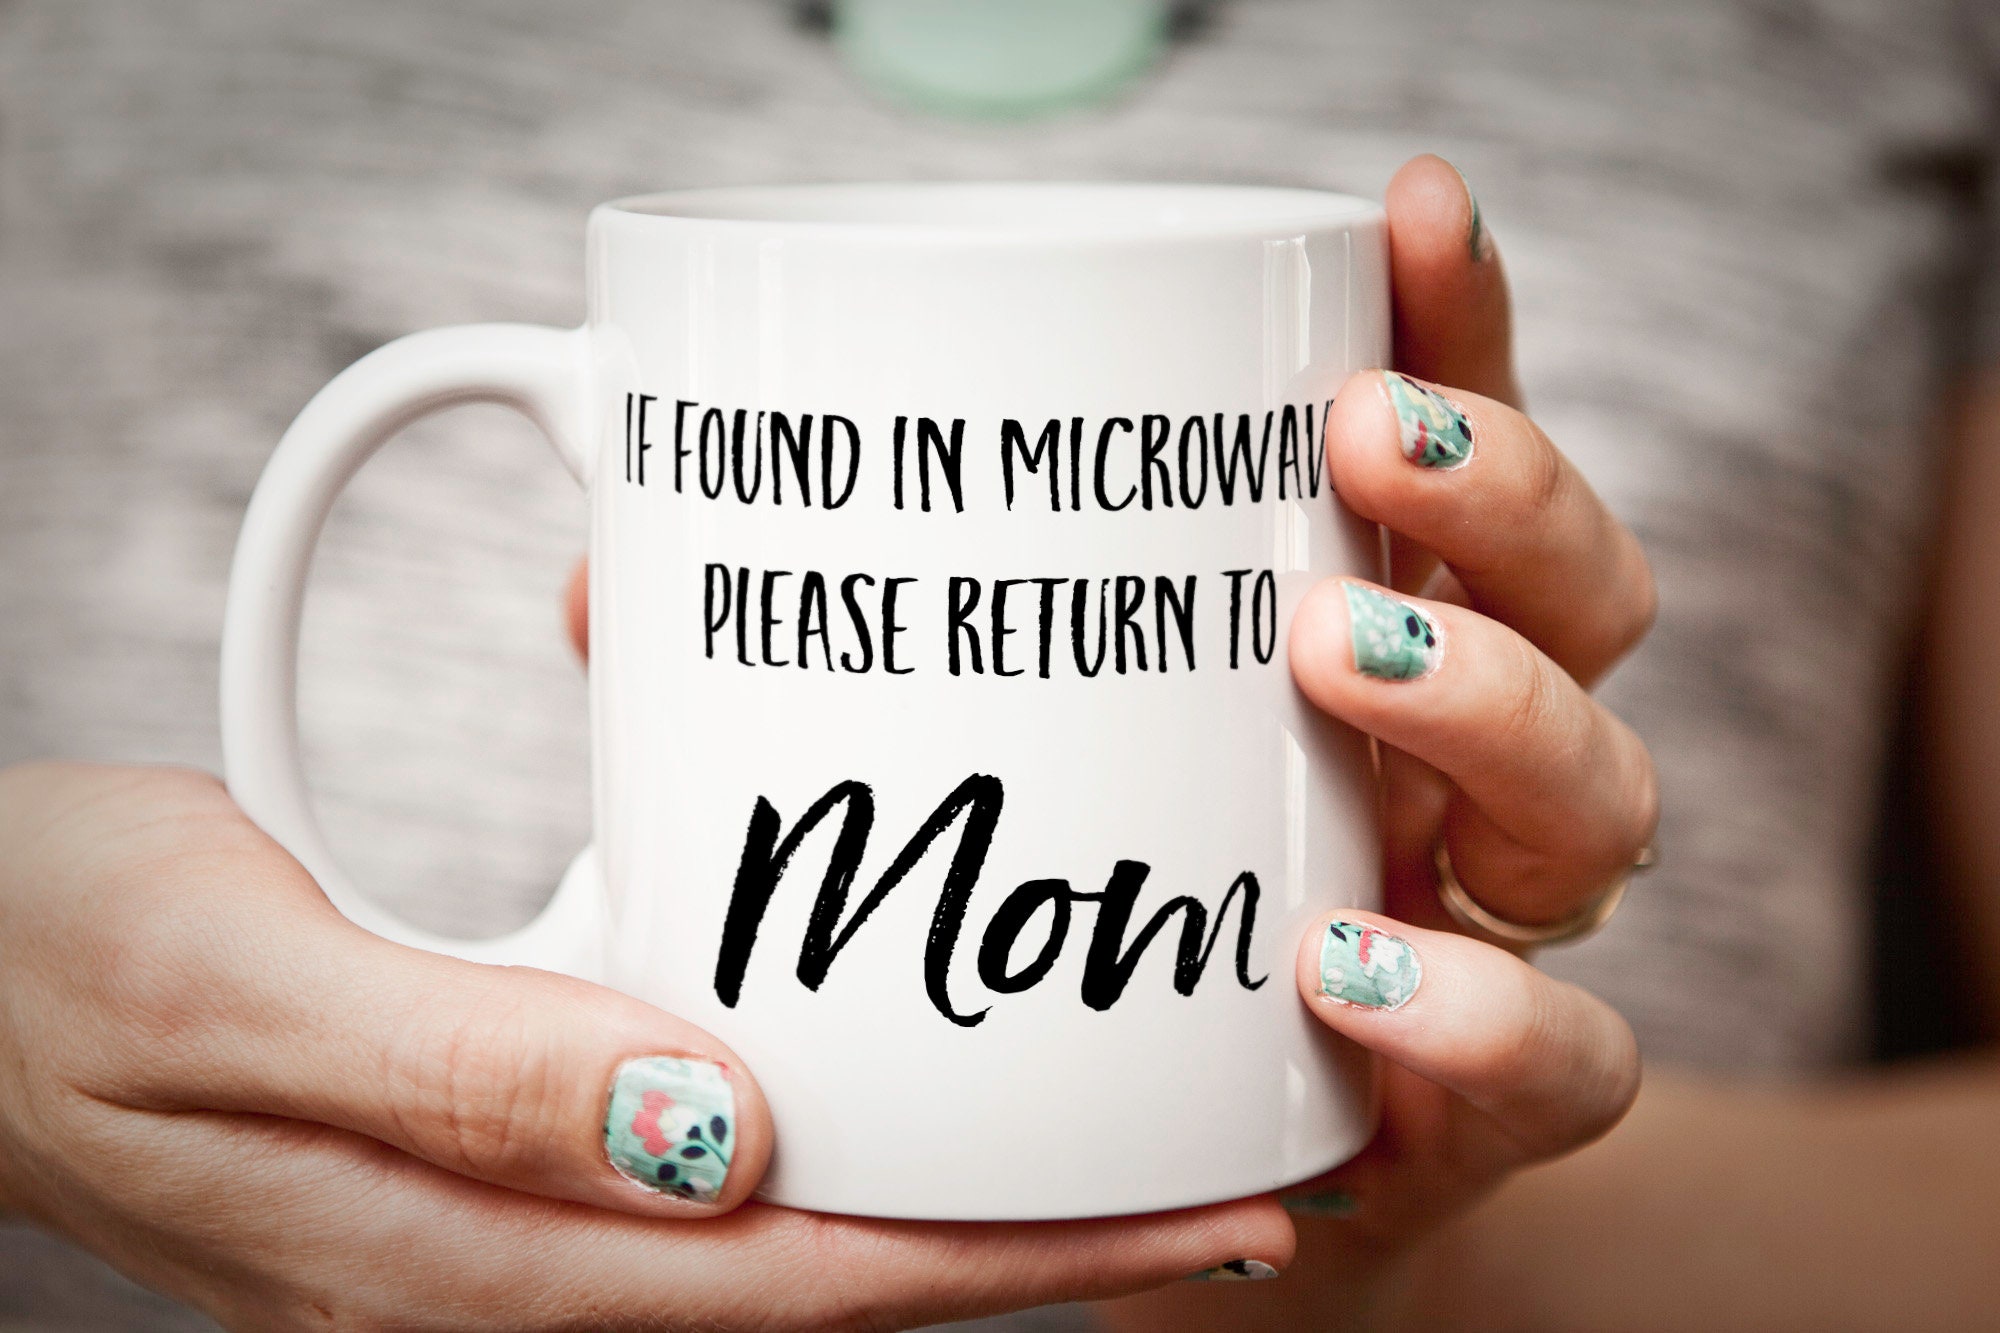 Funny Mugs Coffee Mug Ceramic Mug Gifts for Mom Gift for her Mother's Day Gift  funny coffee mug handmade But did you die? #momlife